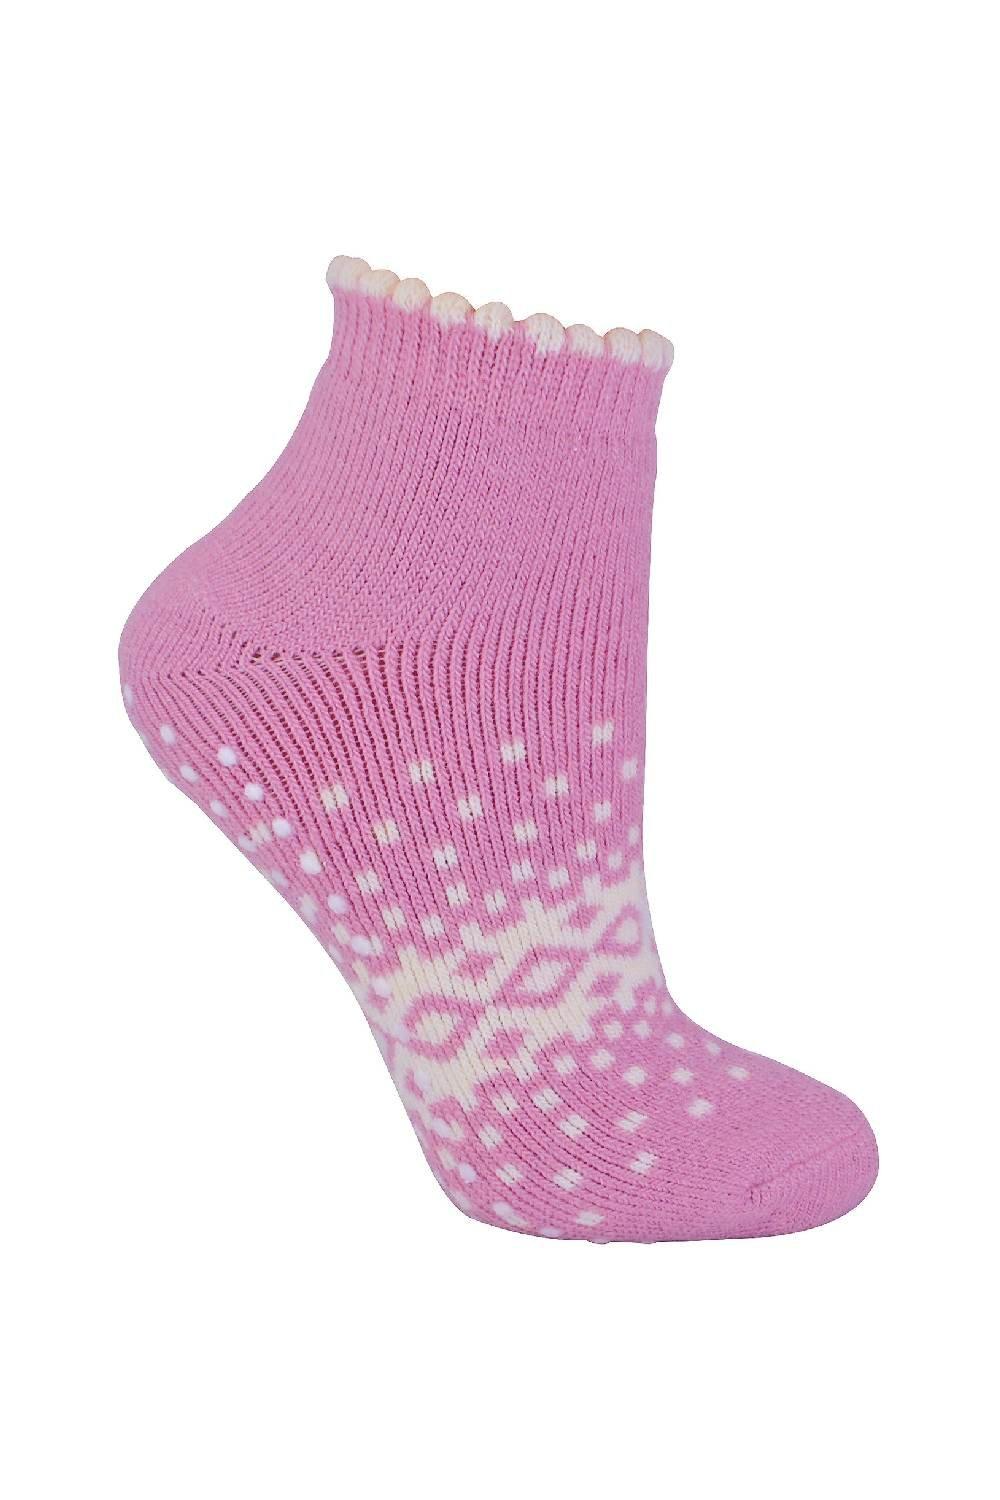 Thermal Low Cut Wool Non Slip Ankle Slipper Socks